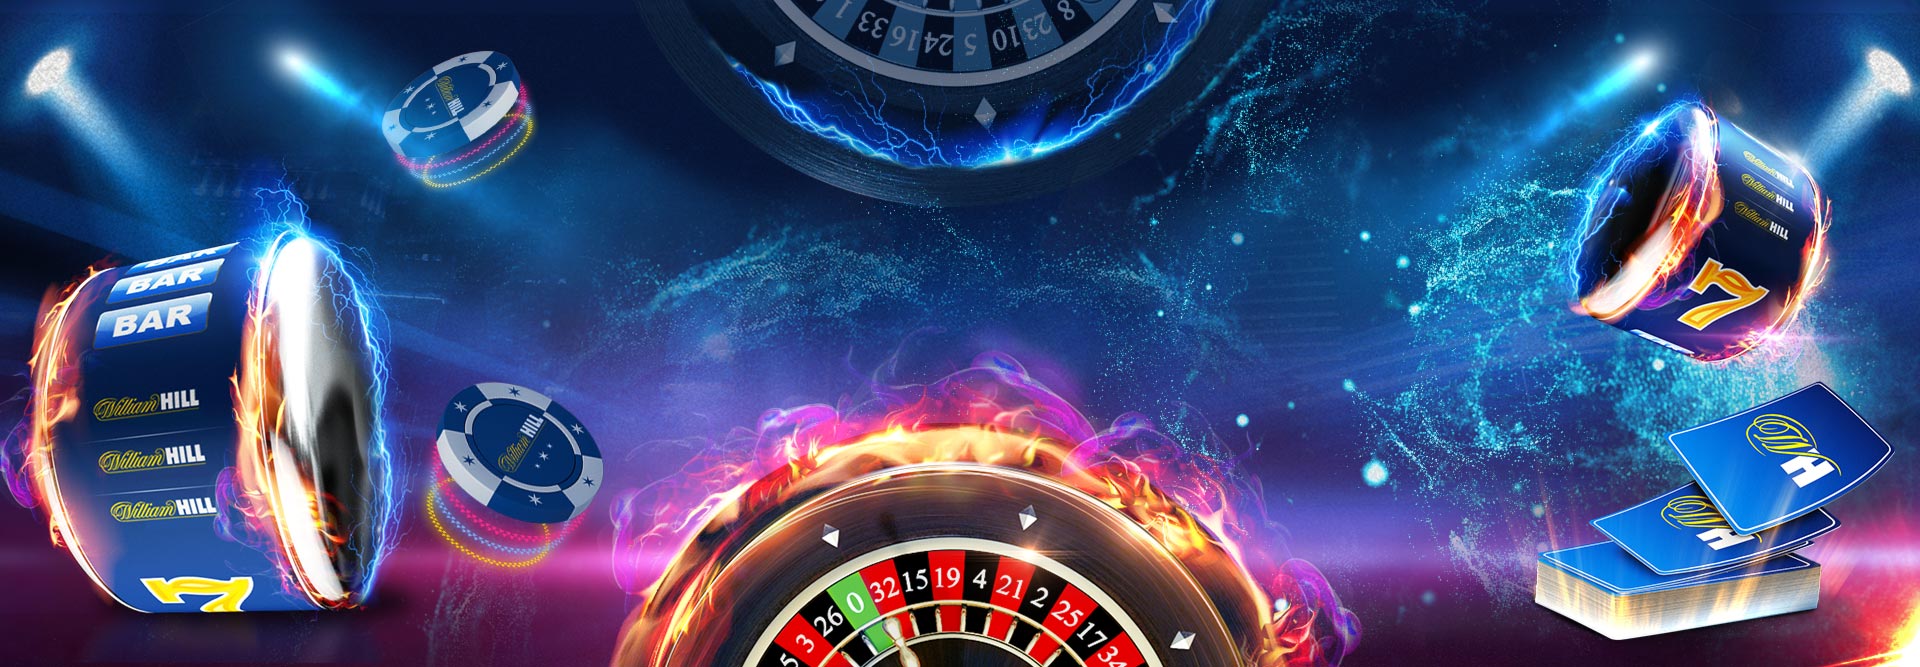 Online casino slot machine apps